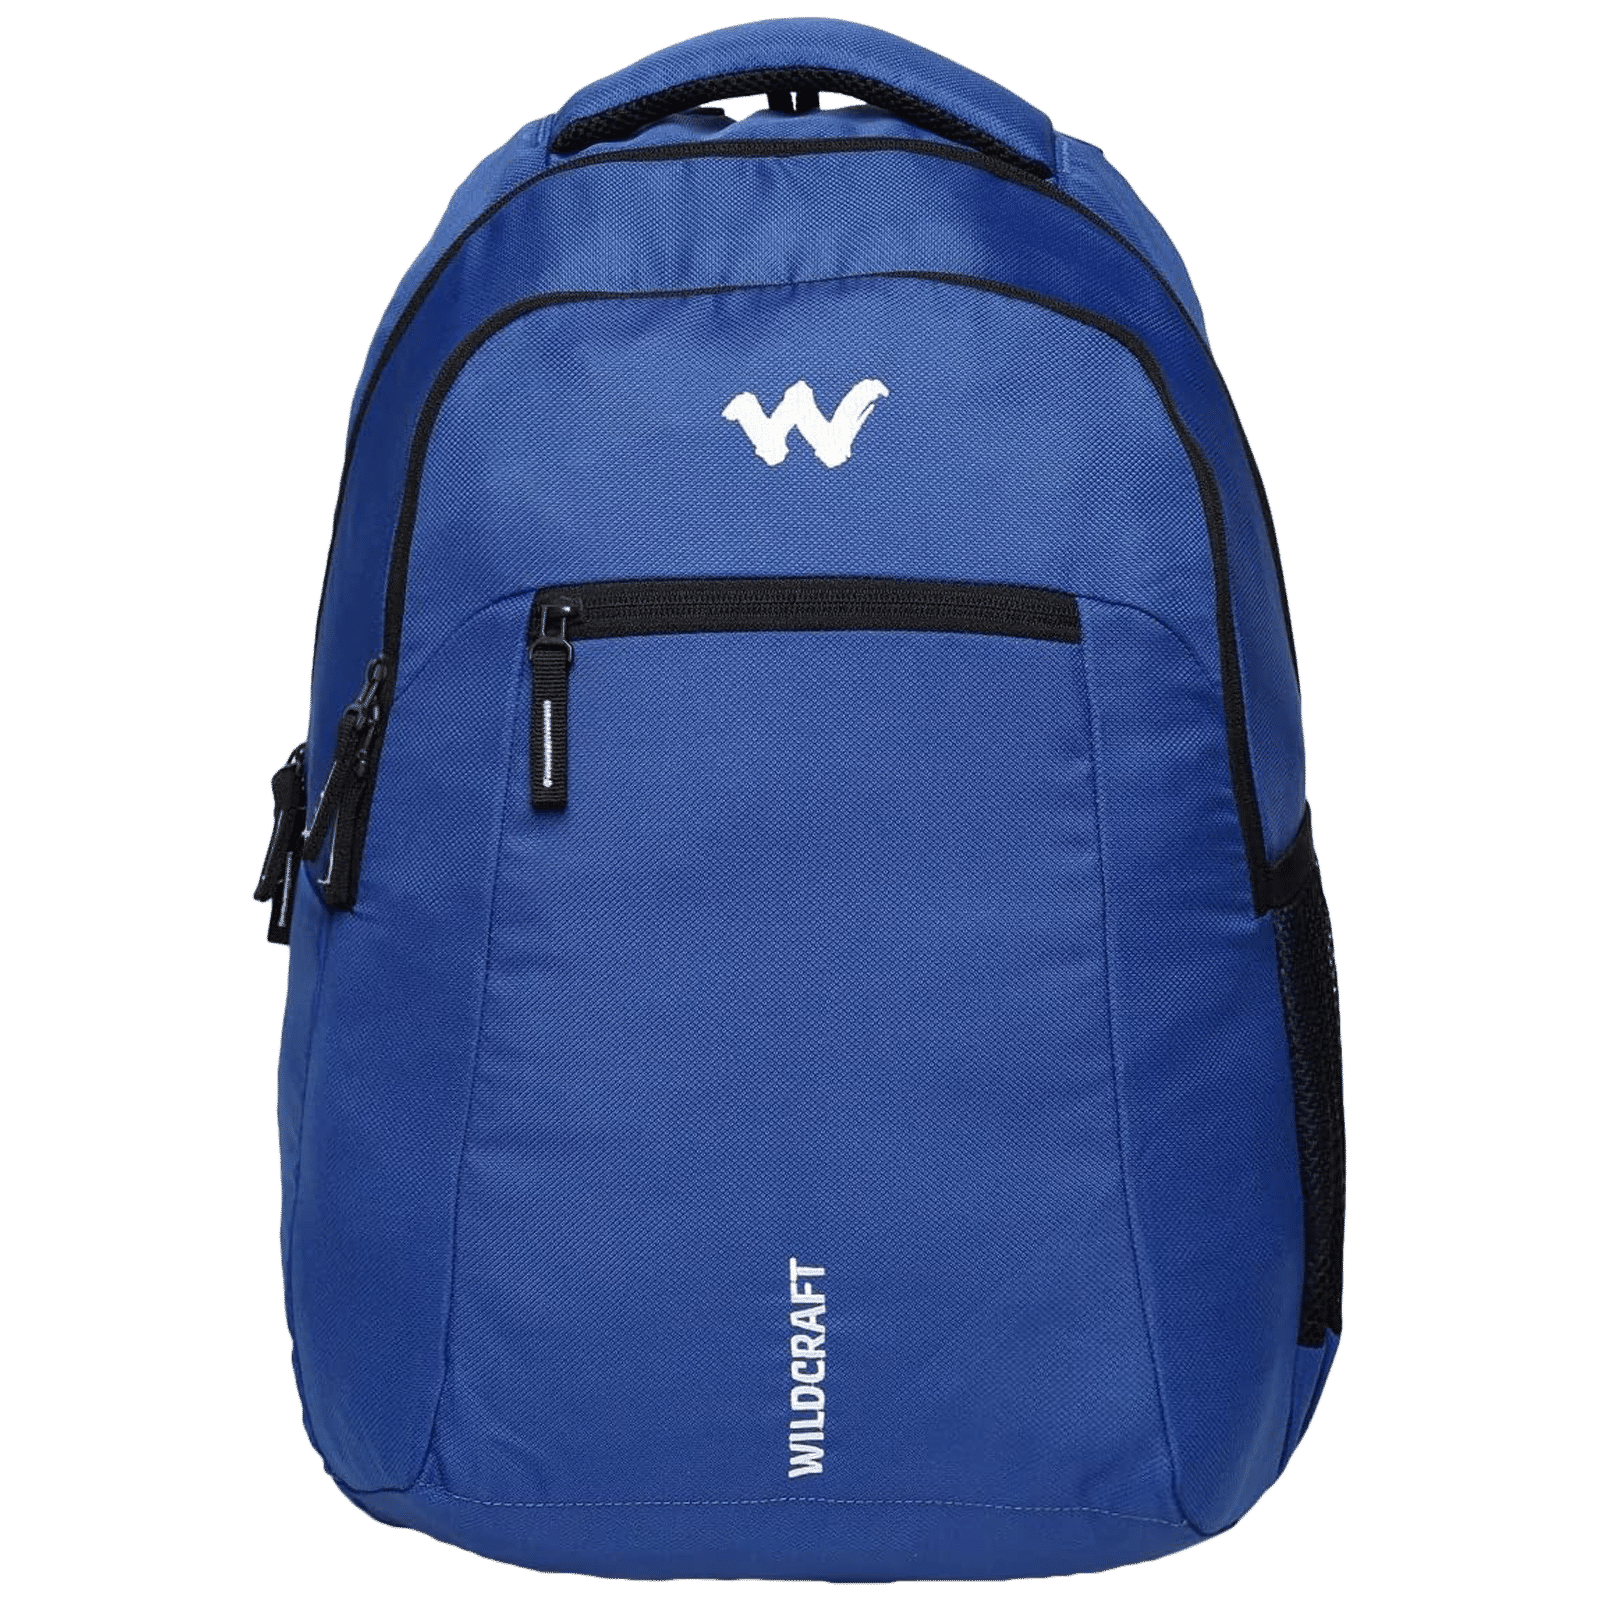 Wildcraft Fancy Backpack Bag at Rs 4000/piece | Backpack Bag in Jaipur |  ID: 15449245633